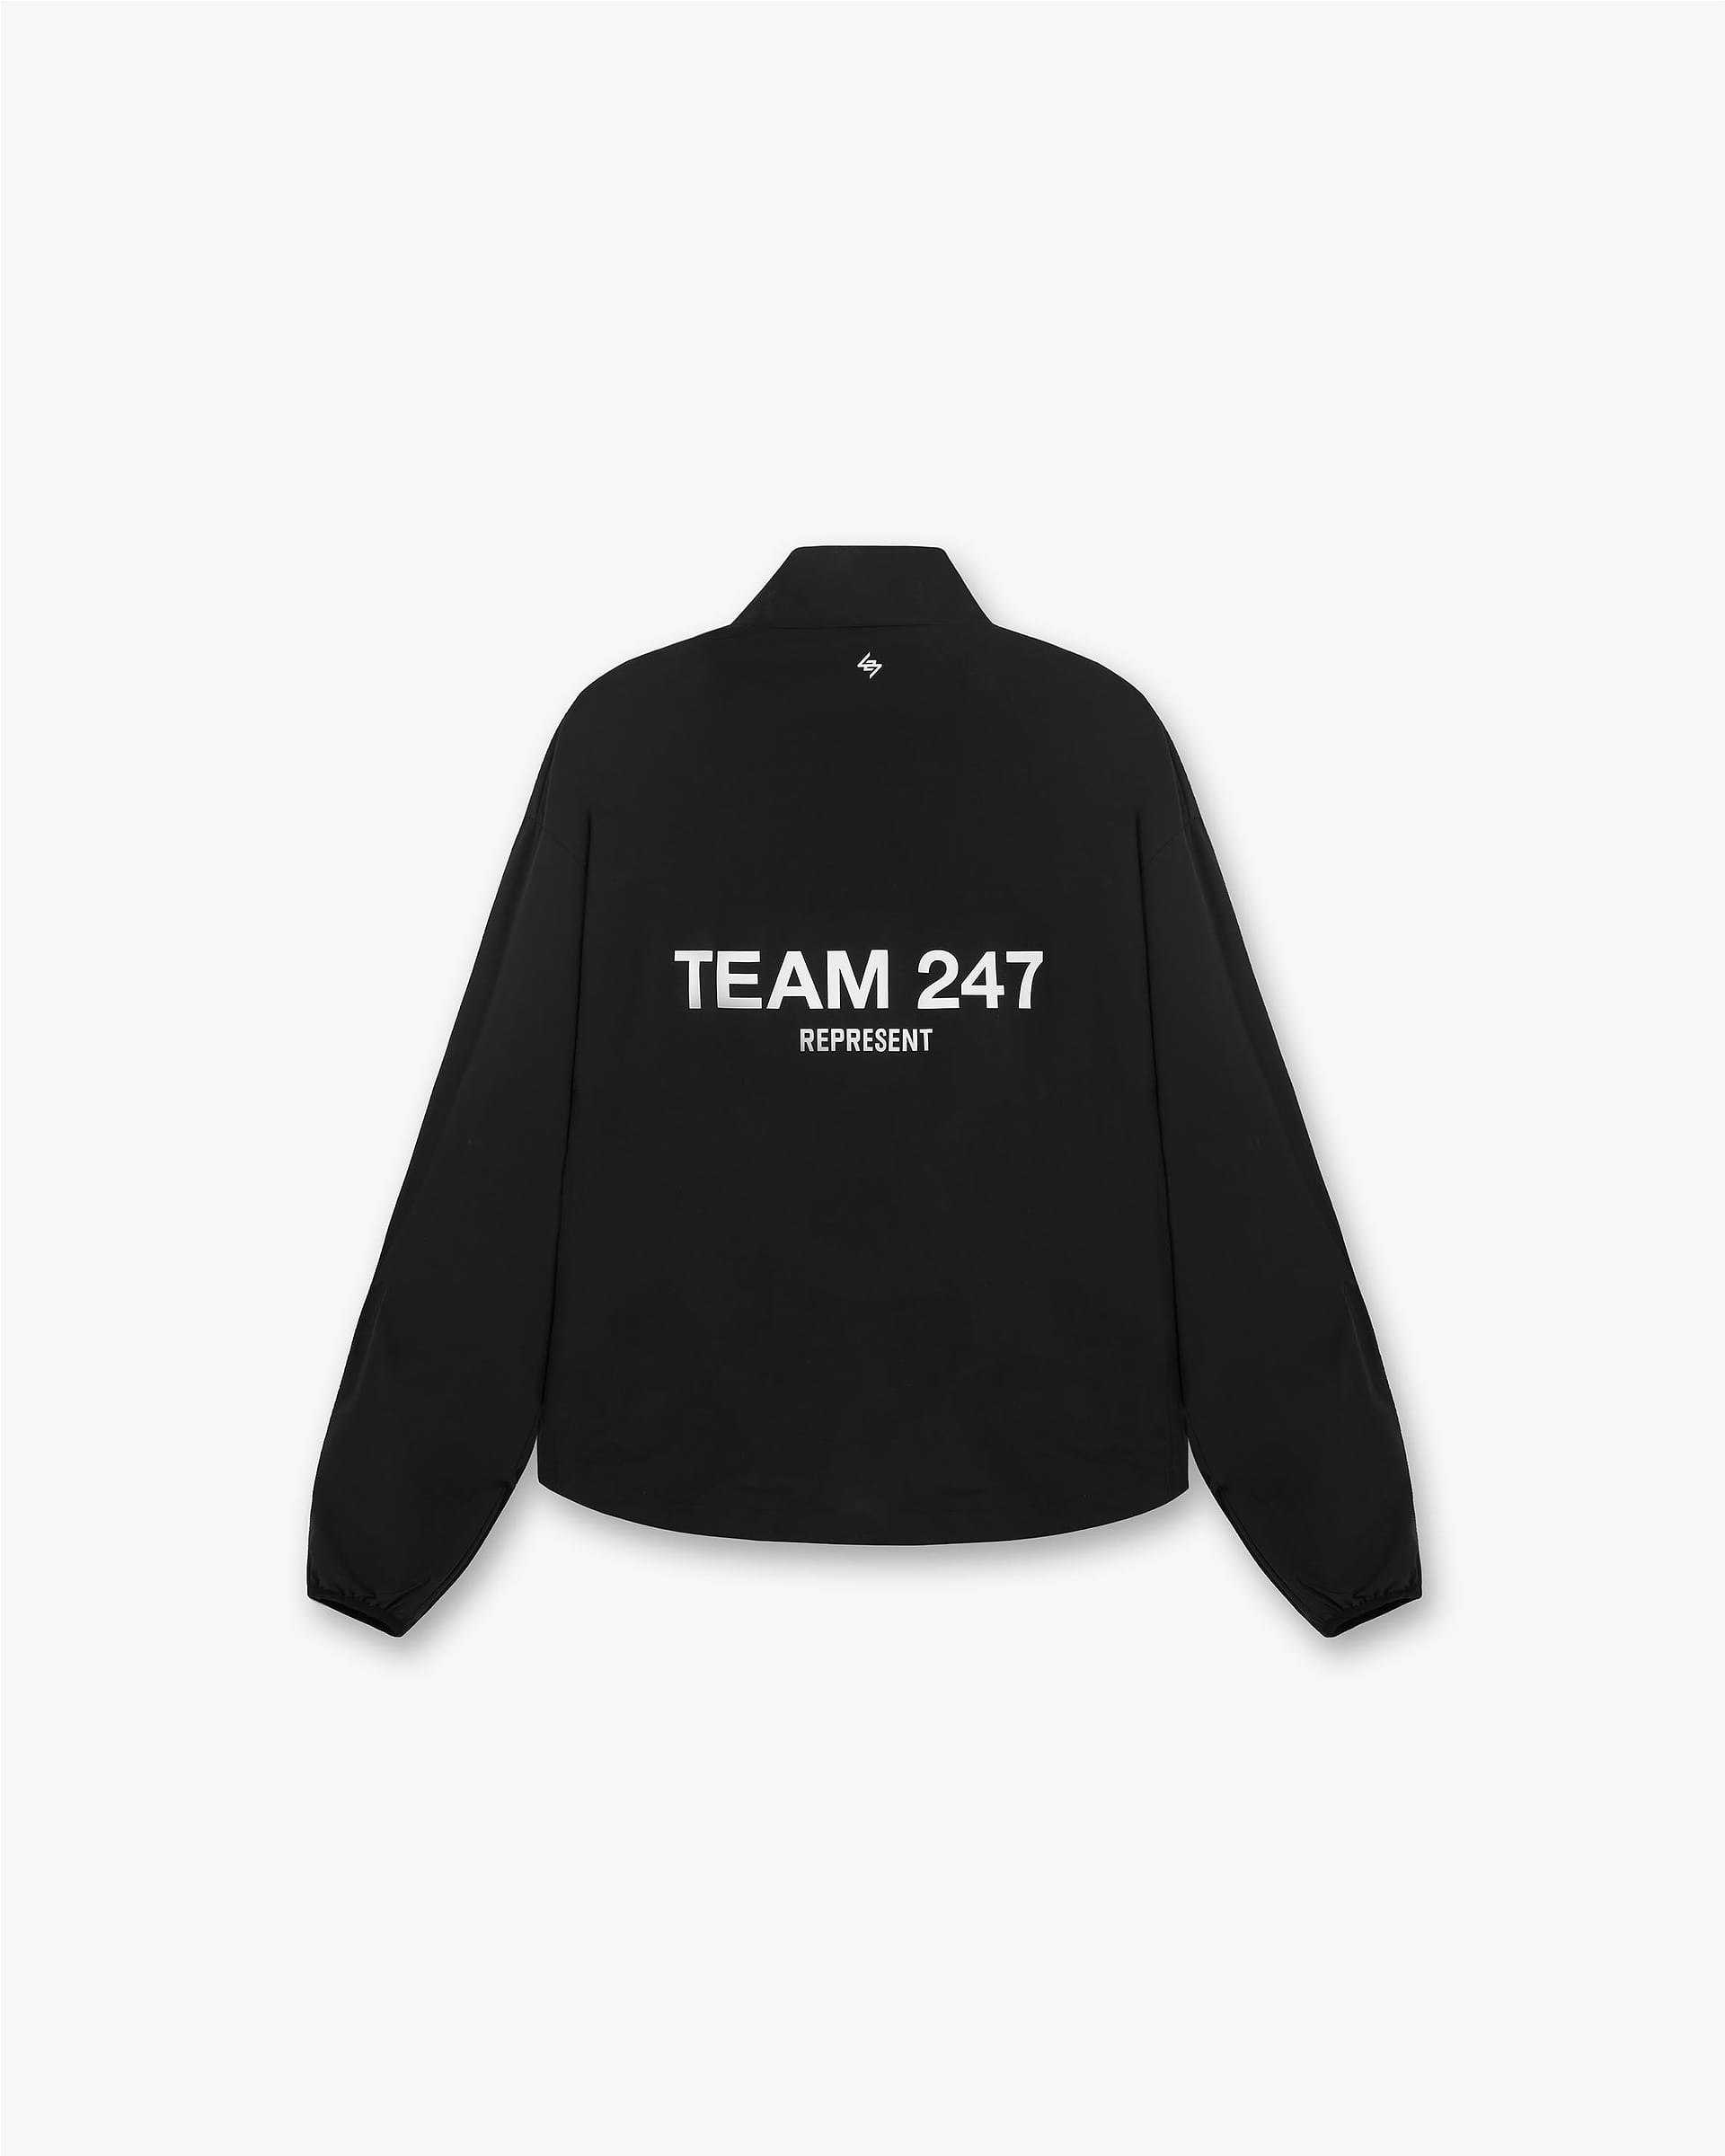 Team Black Long T-Shirt Sleeve REPRESENT 247 | | CLO